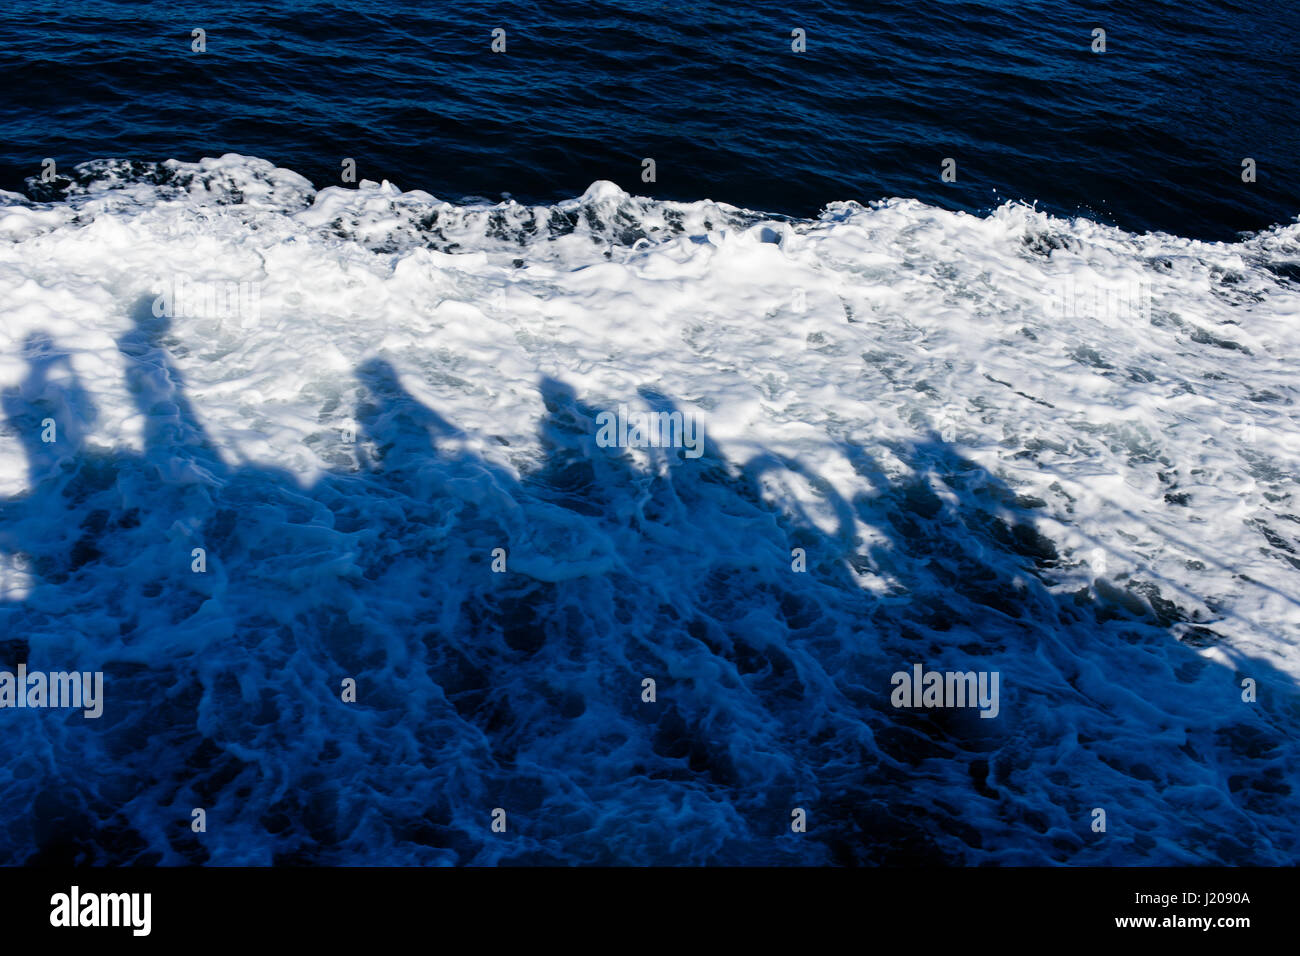 Shadow of people on sea Stock Photo